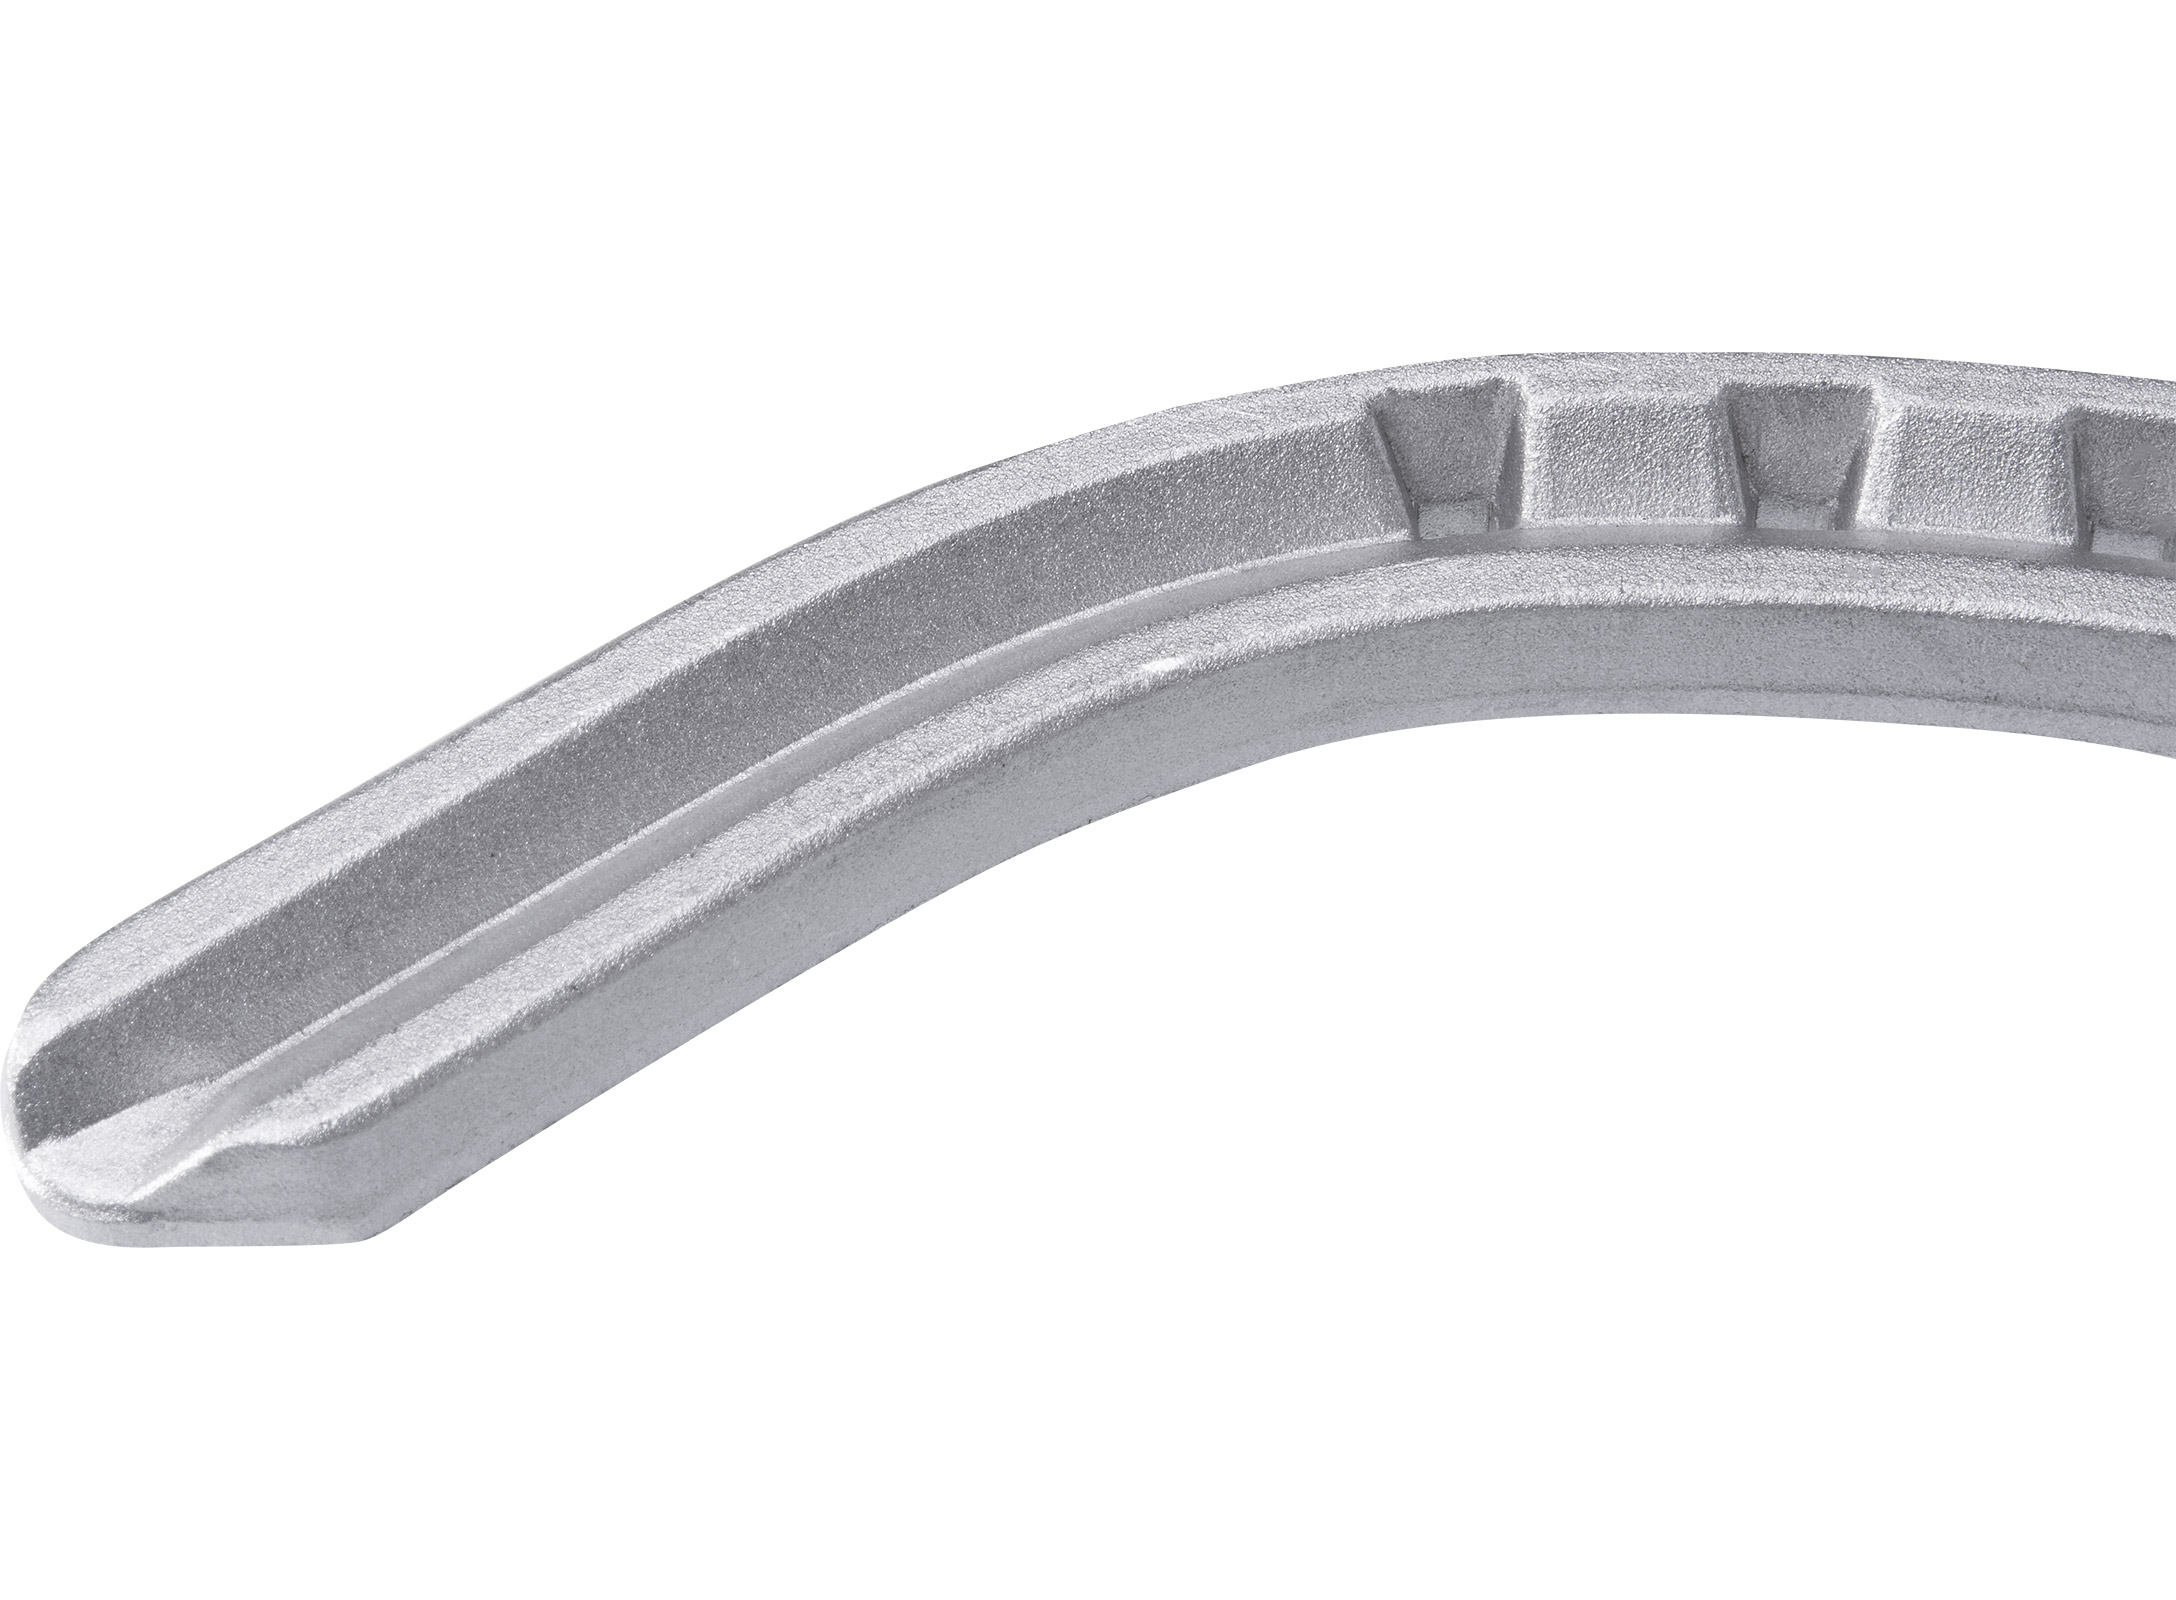 St. Croix Fullered Aluminium horseshoe, detail